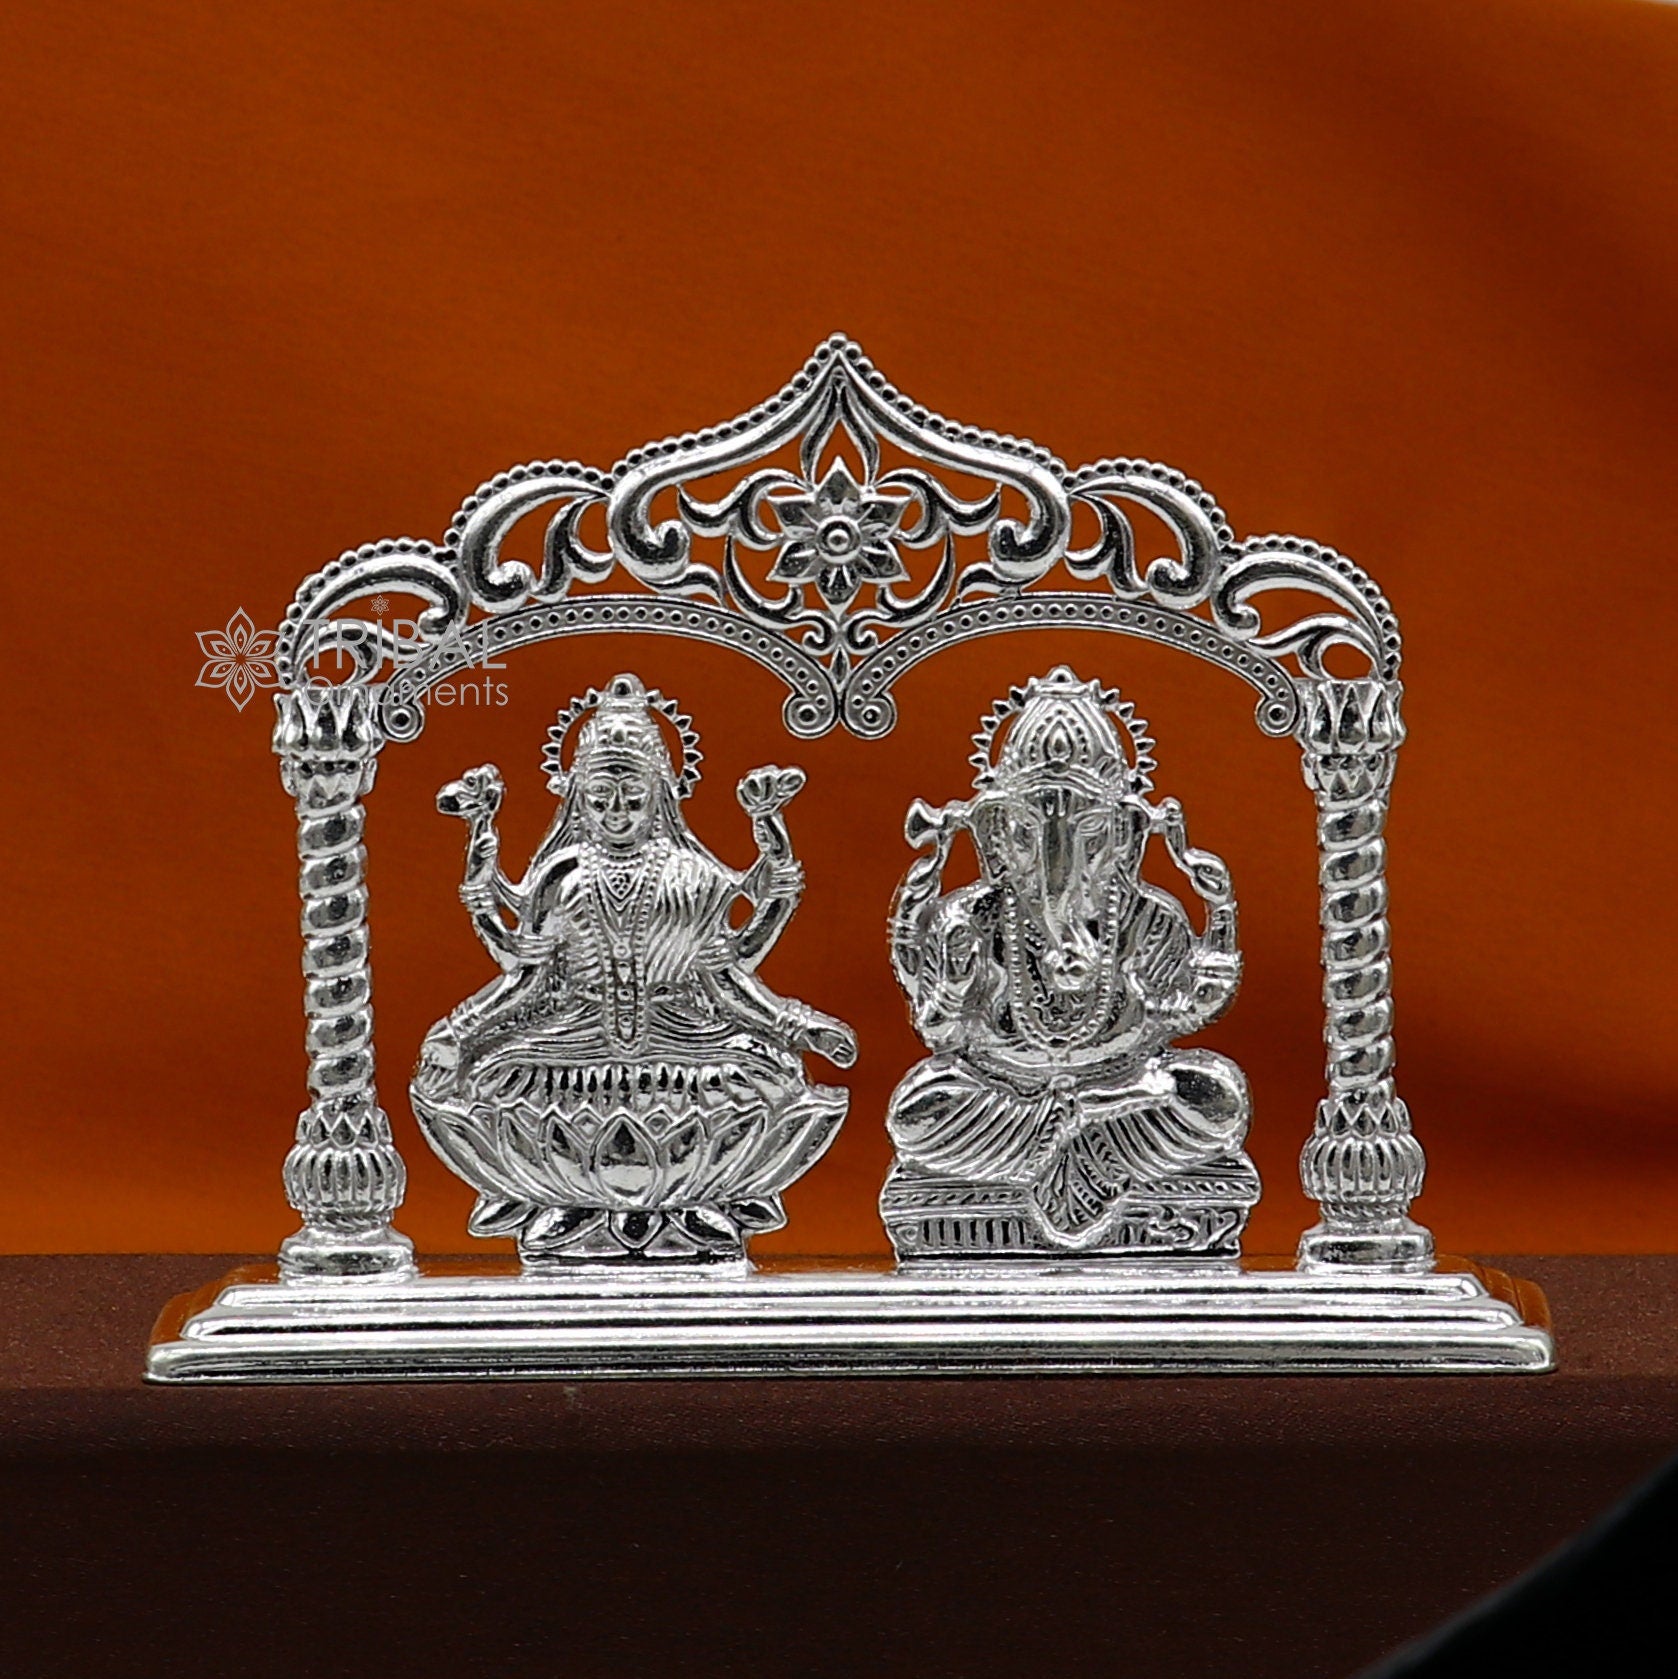 3.5" 925 Sterling silver handmade gorgeous Hindu idols Lakshmi and Ganesha statue, puja article figurine, home décor Diwali puja gift art661 - TRIBAL ORNAMENTS